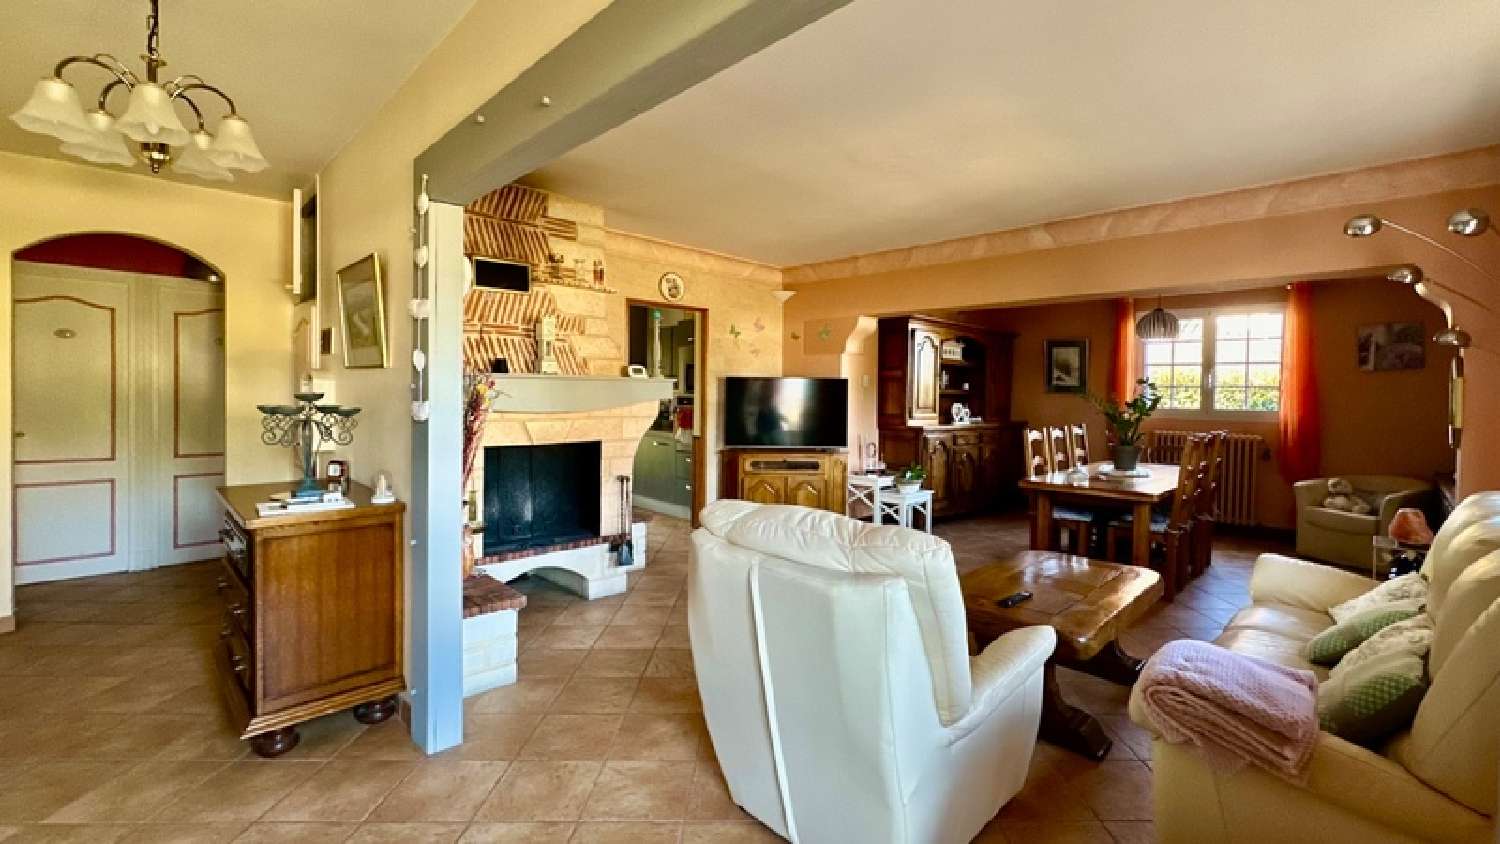  à vendre maison Bergerac Dordogne 6